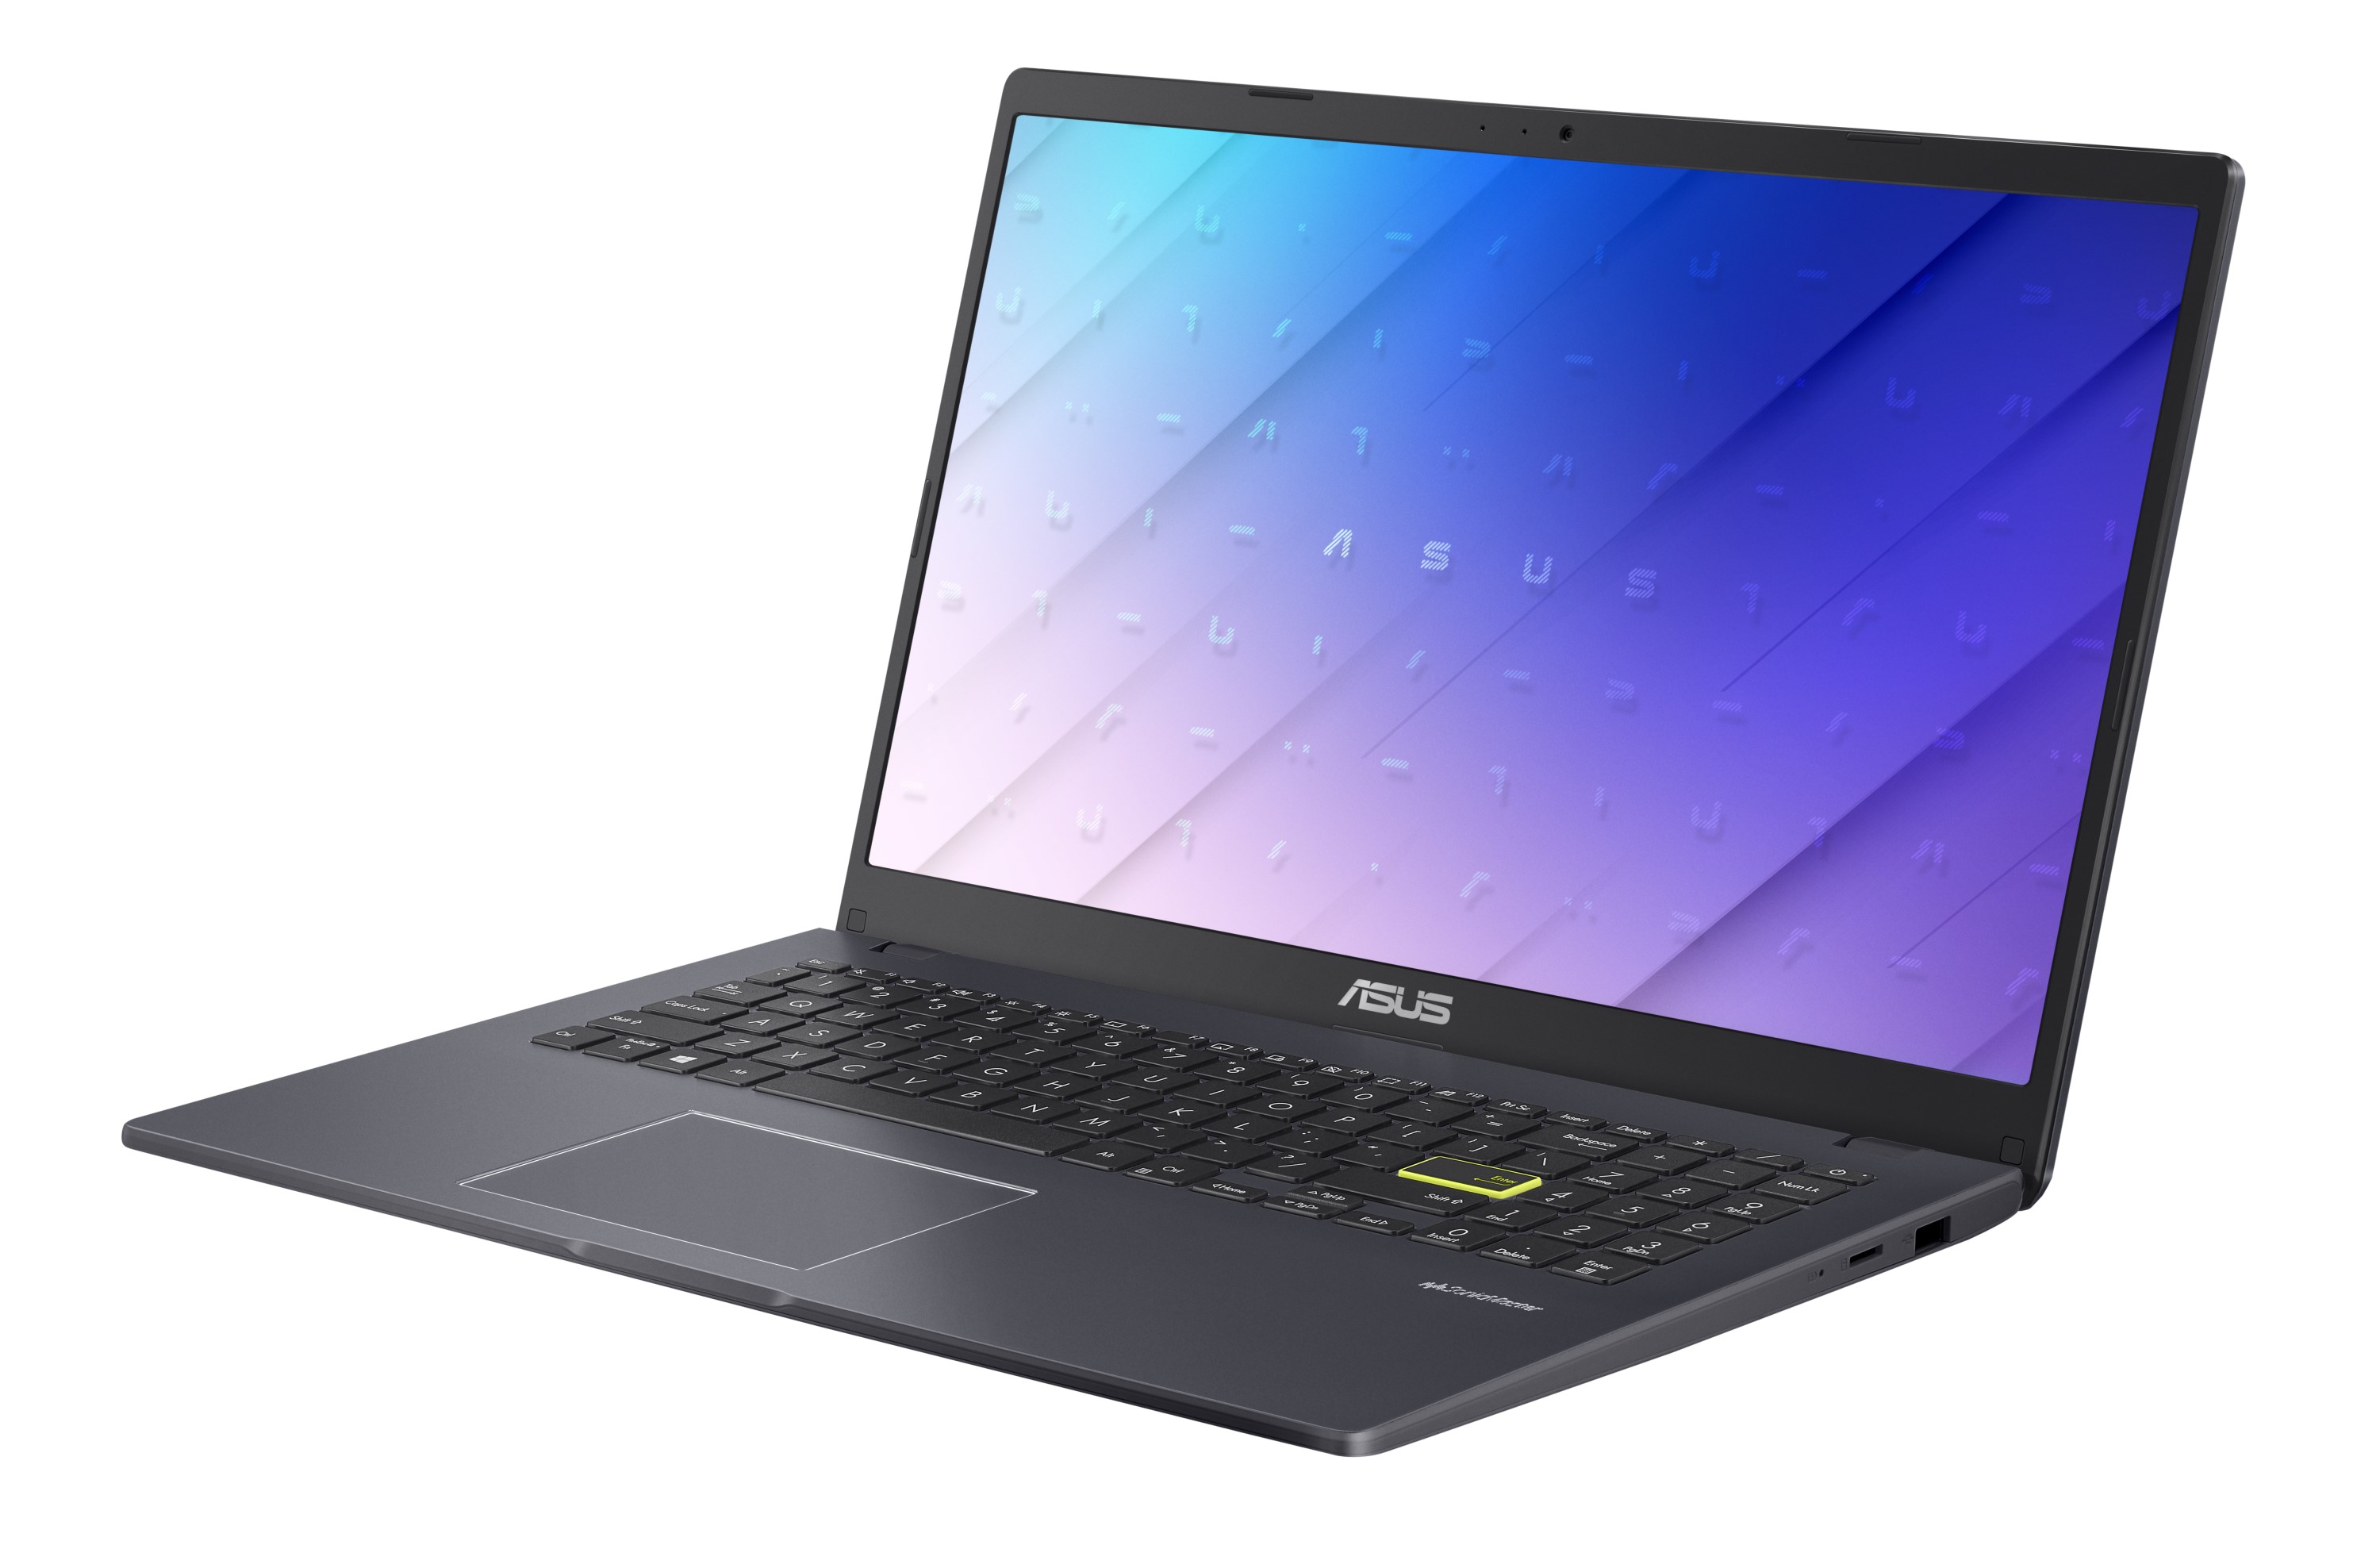 ASUS 15.6" FHD PC Laptop, Intel Celeron N4020, 4GB RAM, 128GB SSD, Windows 10 S Mode, L510MA-WB04 - image 1 of 10